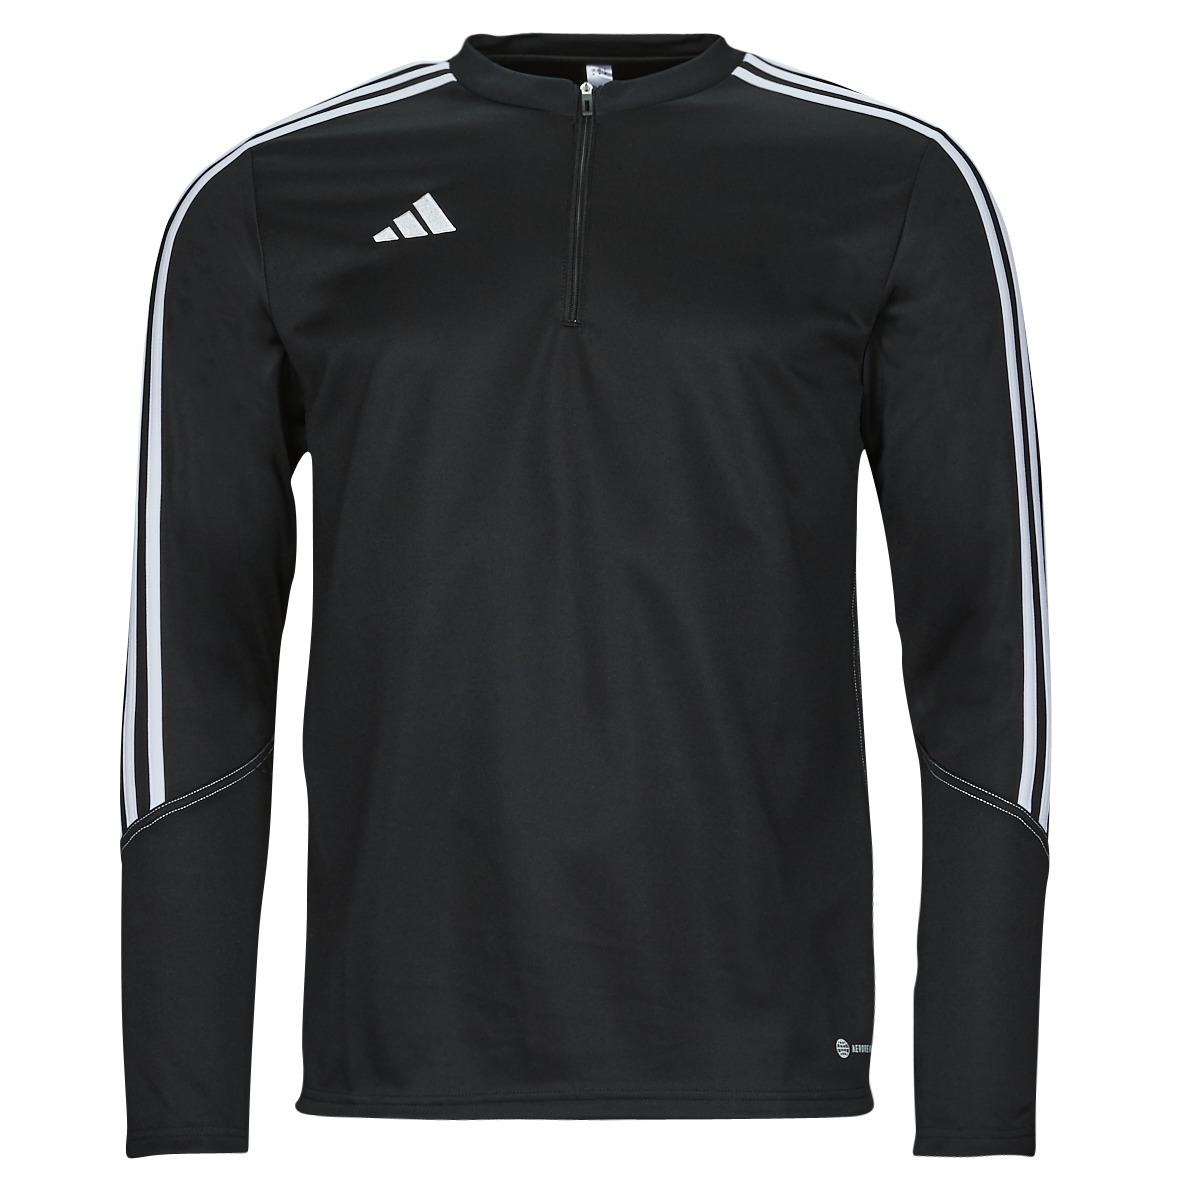 Adidas - Black Training Jacket Spartoo GOOFASH